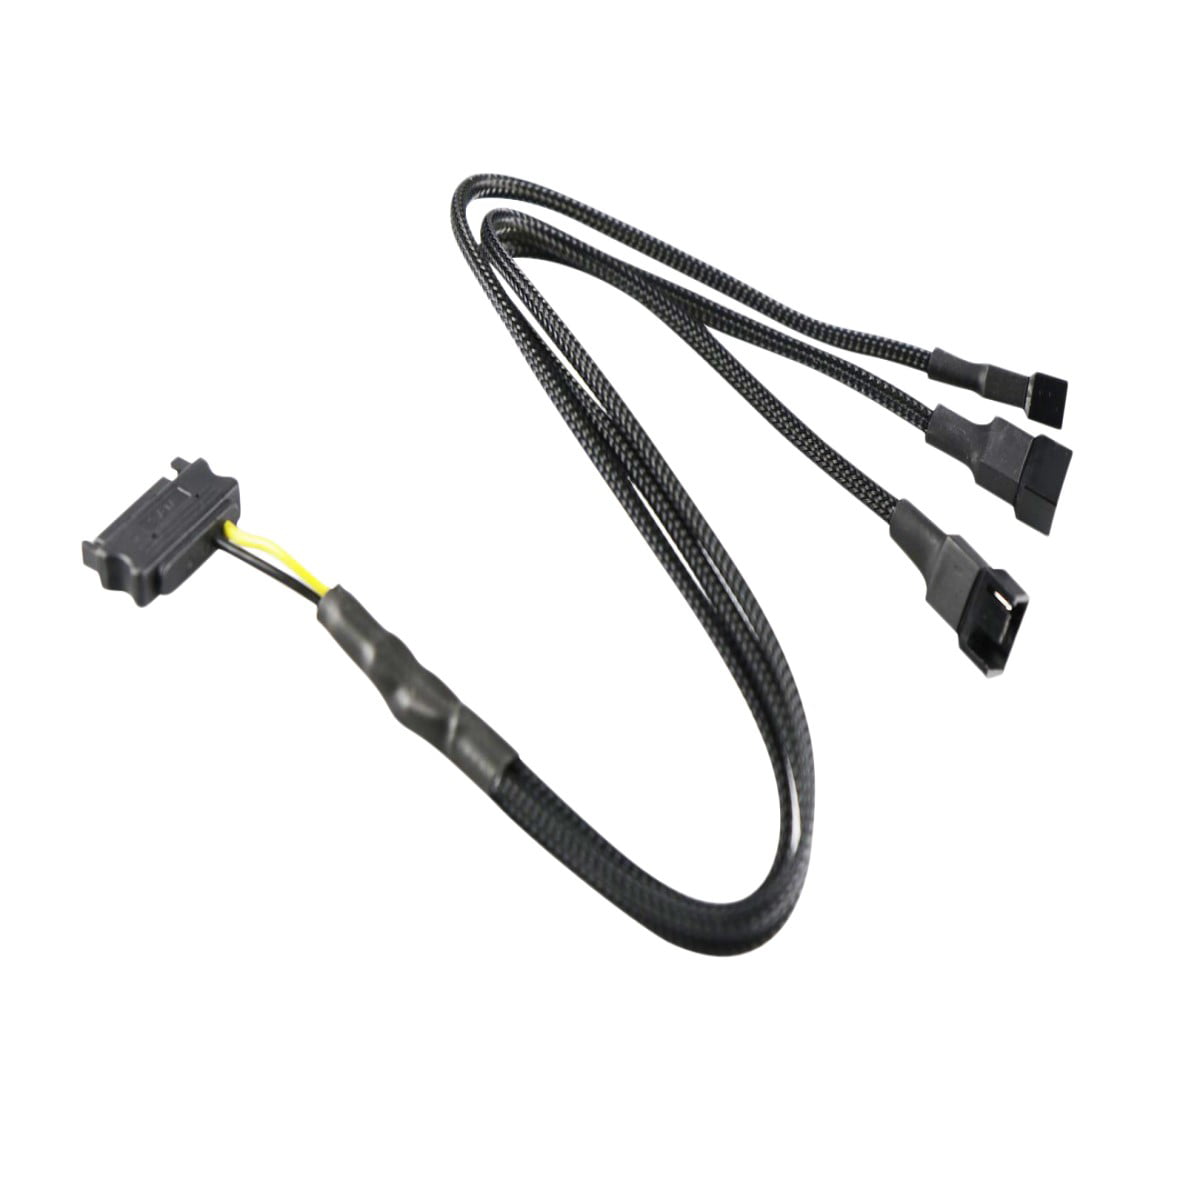 SATA Power Adapter Sleeved 3-Way 3/4-Pin Fan Splitter Cable, 40cm, Jet Black Walmart.com